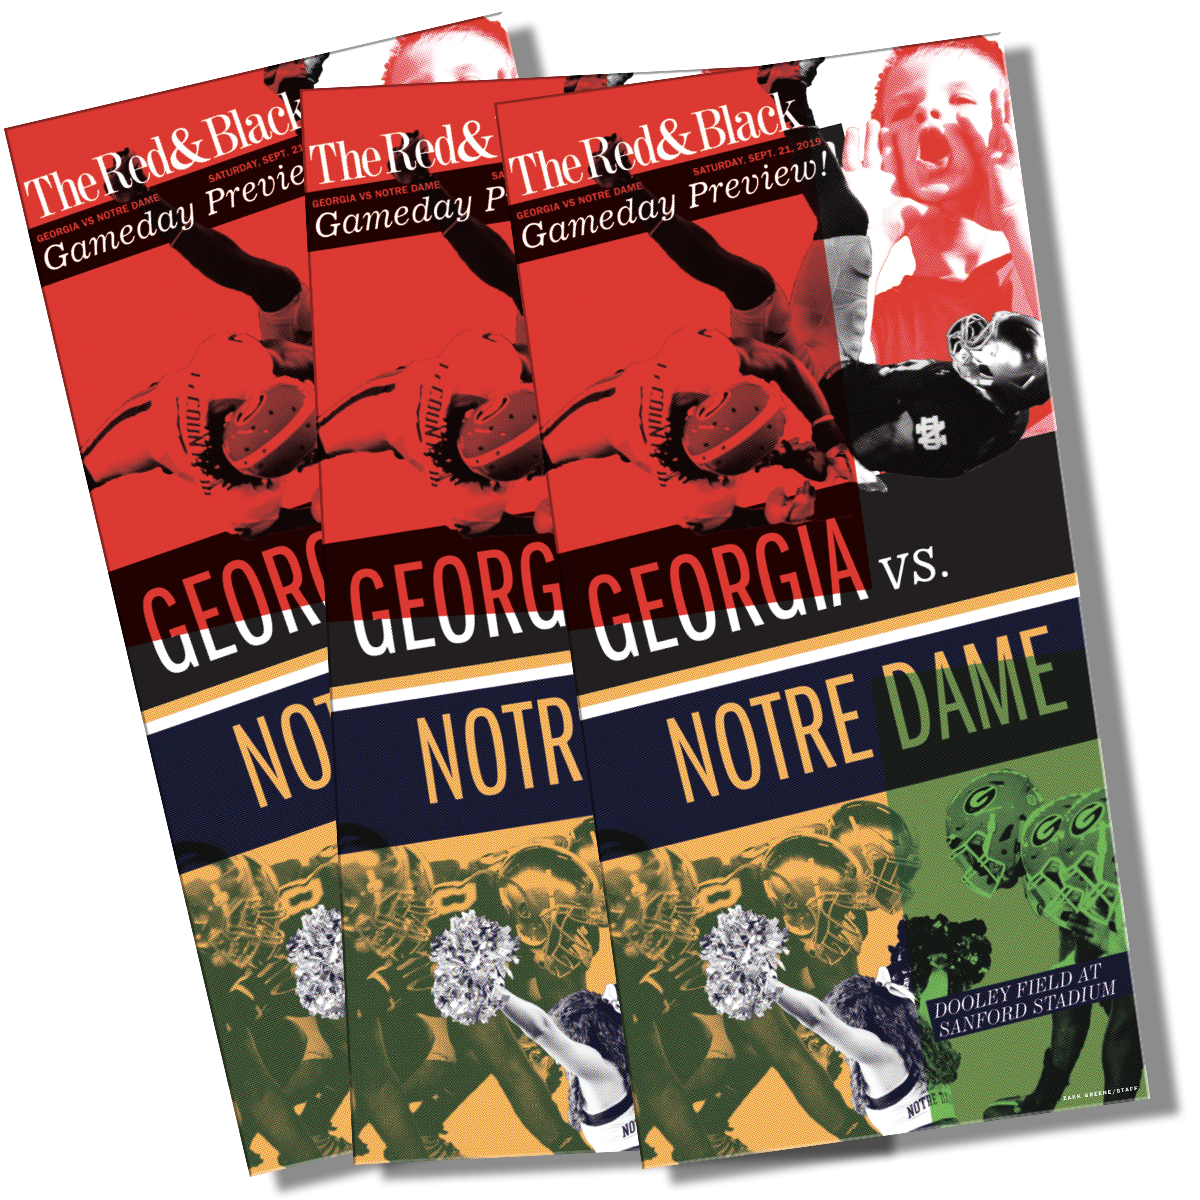 Special Edition Georgia vs. Notre Dame small poster